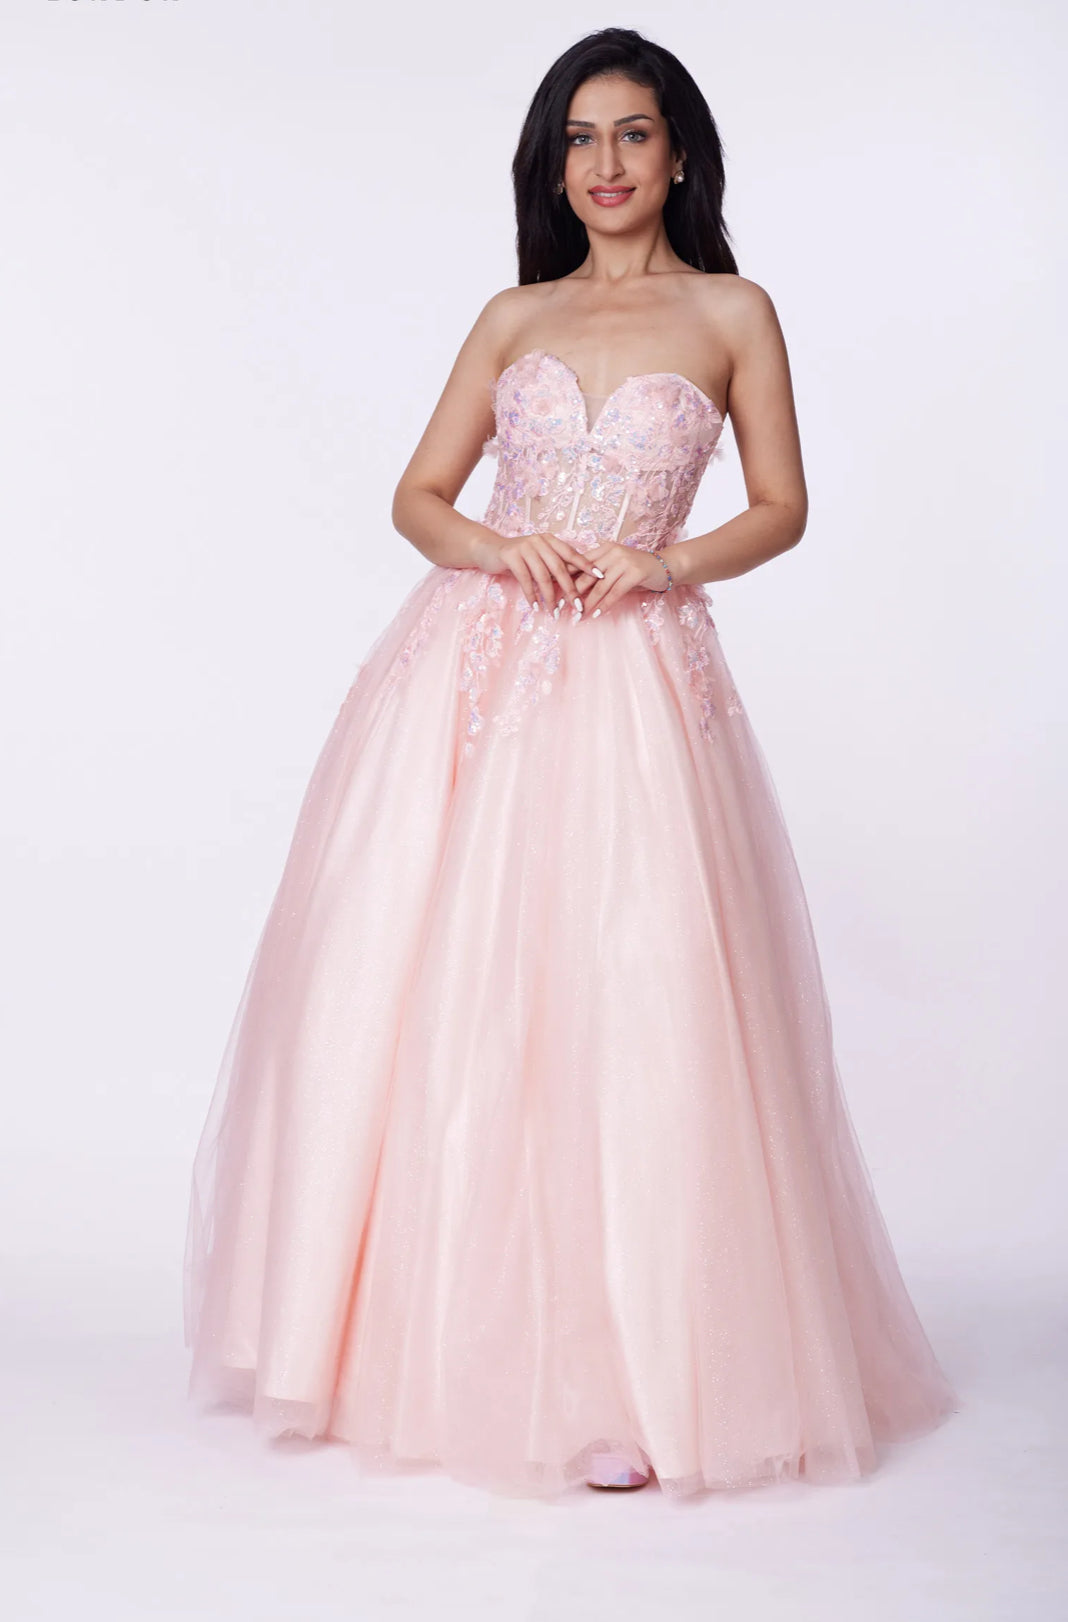 Quinceanera Ballgown Dress - Gorgeous